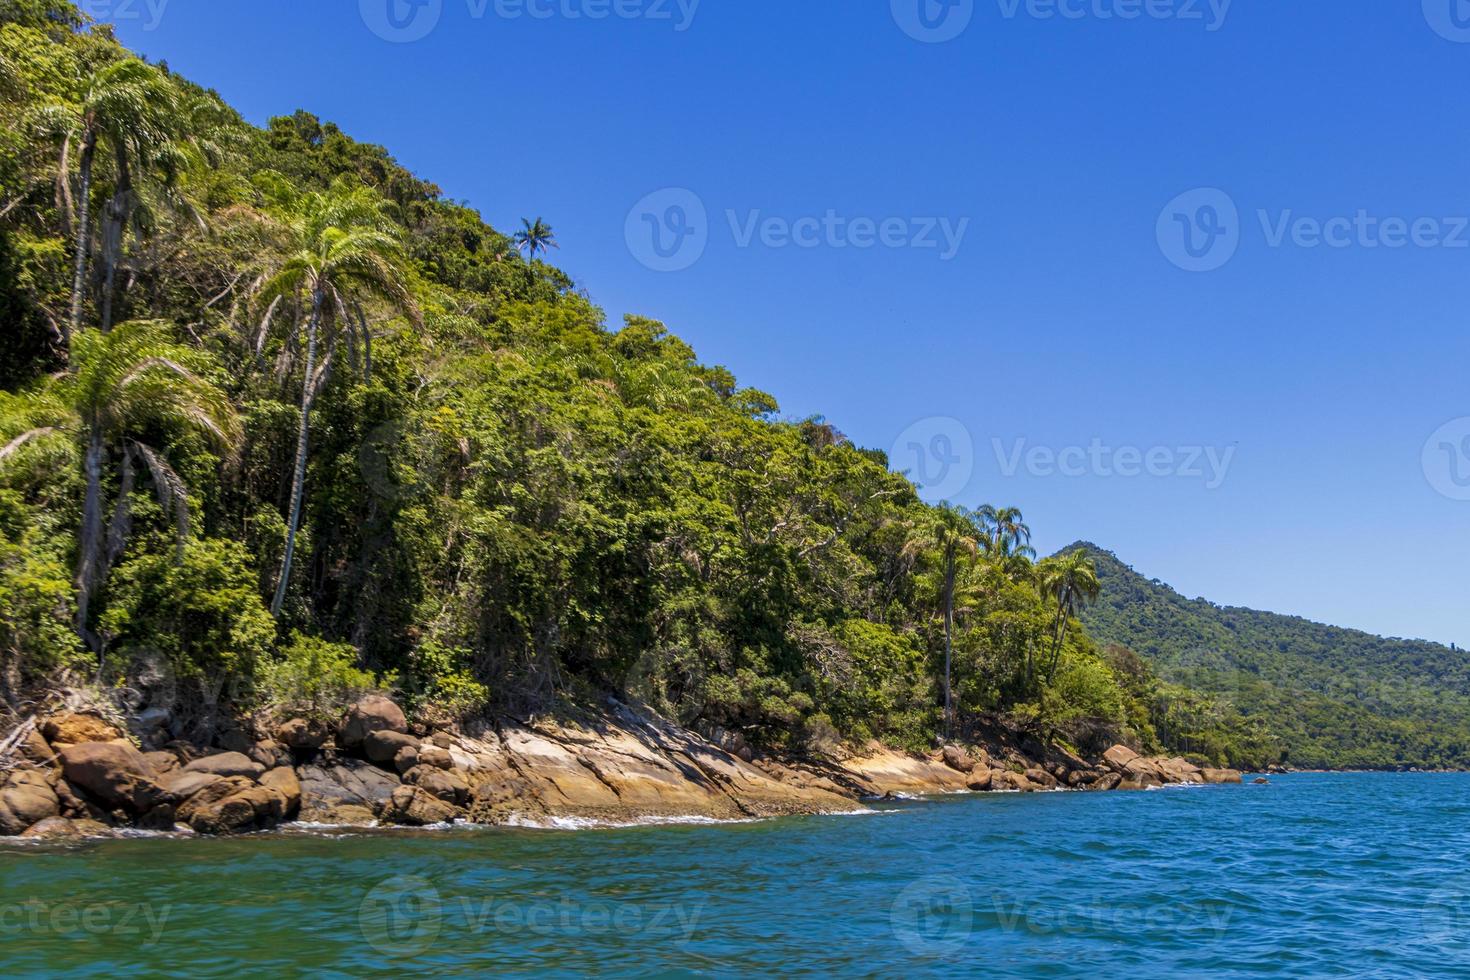 a grande ilha tropical ilha grande, angra dos reis brasil. foto